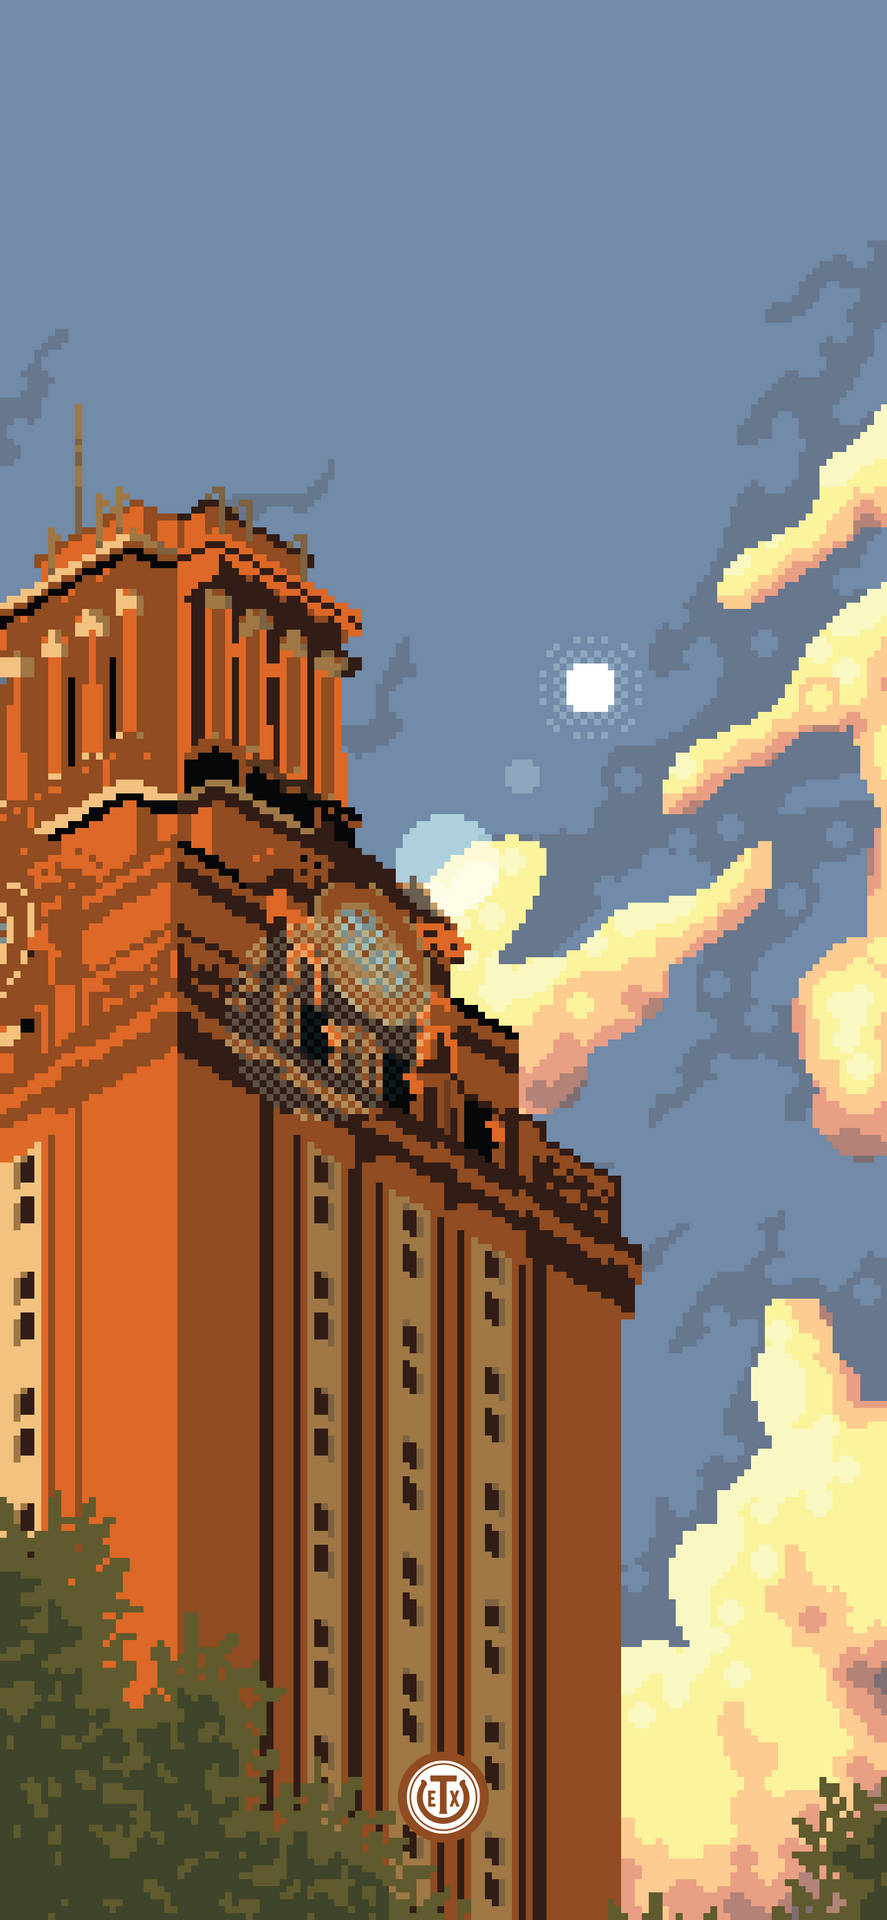 Pixelated University Of Texas Clock Tower Wallpaper